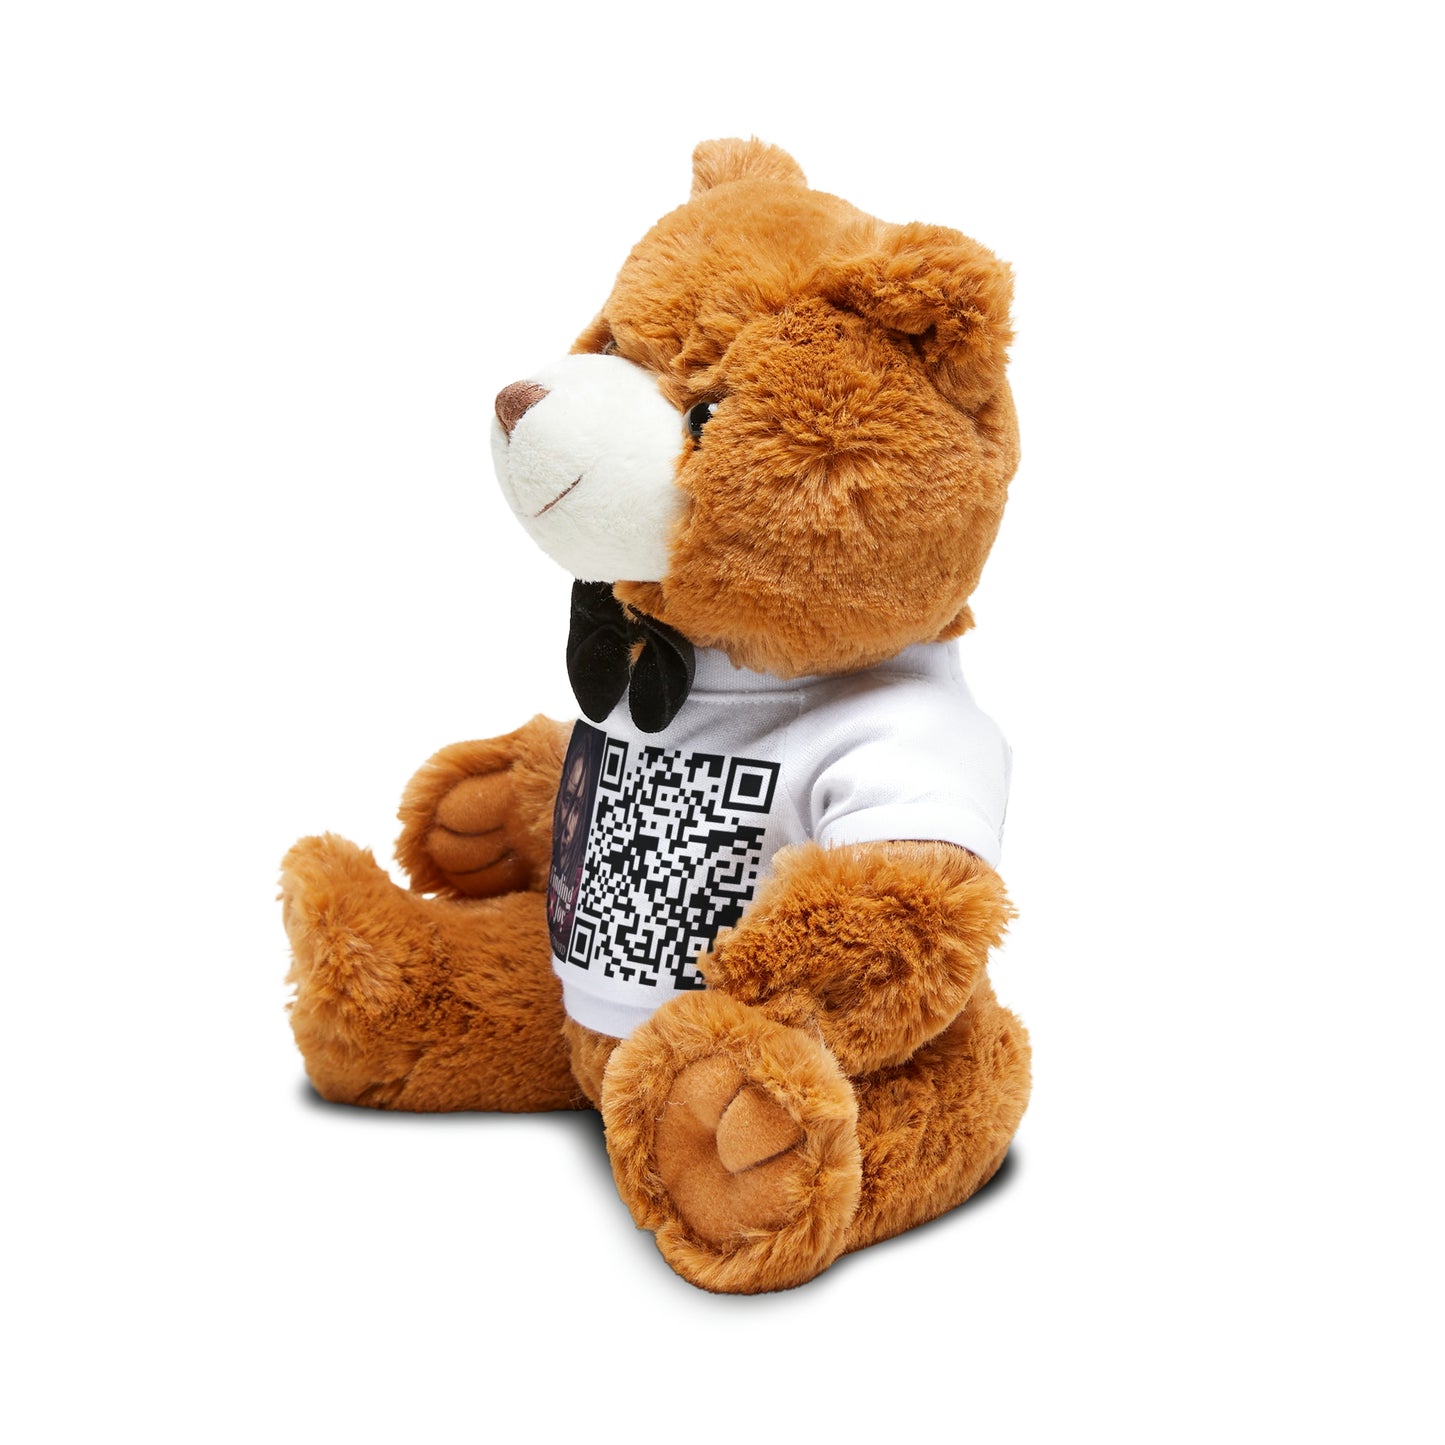 Finding Joy - Teddy Bear